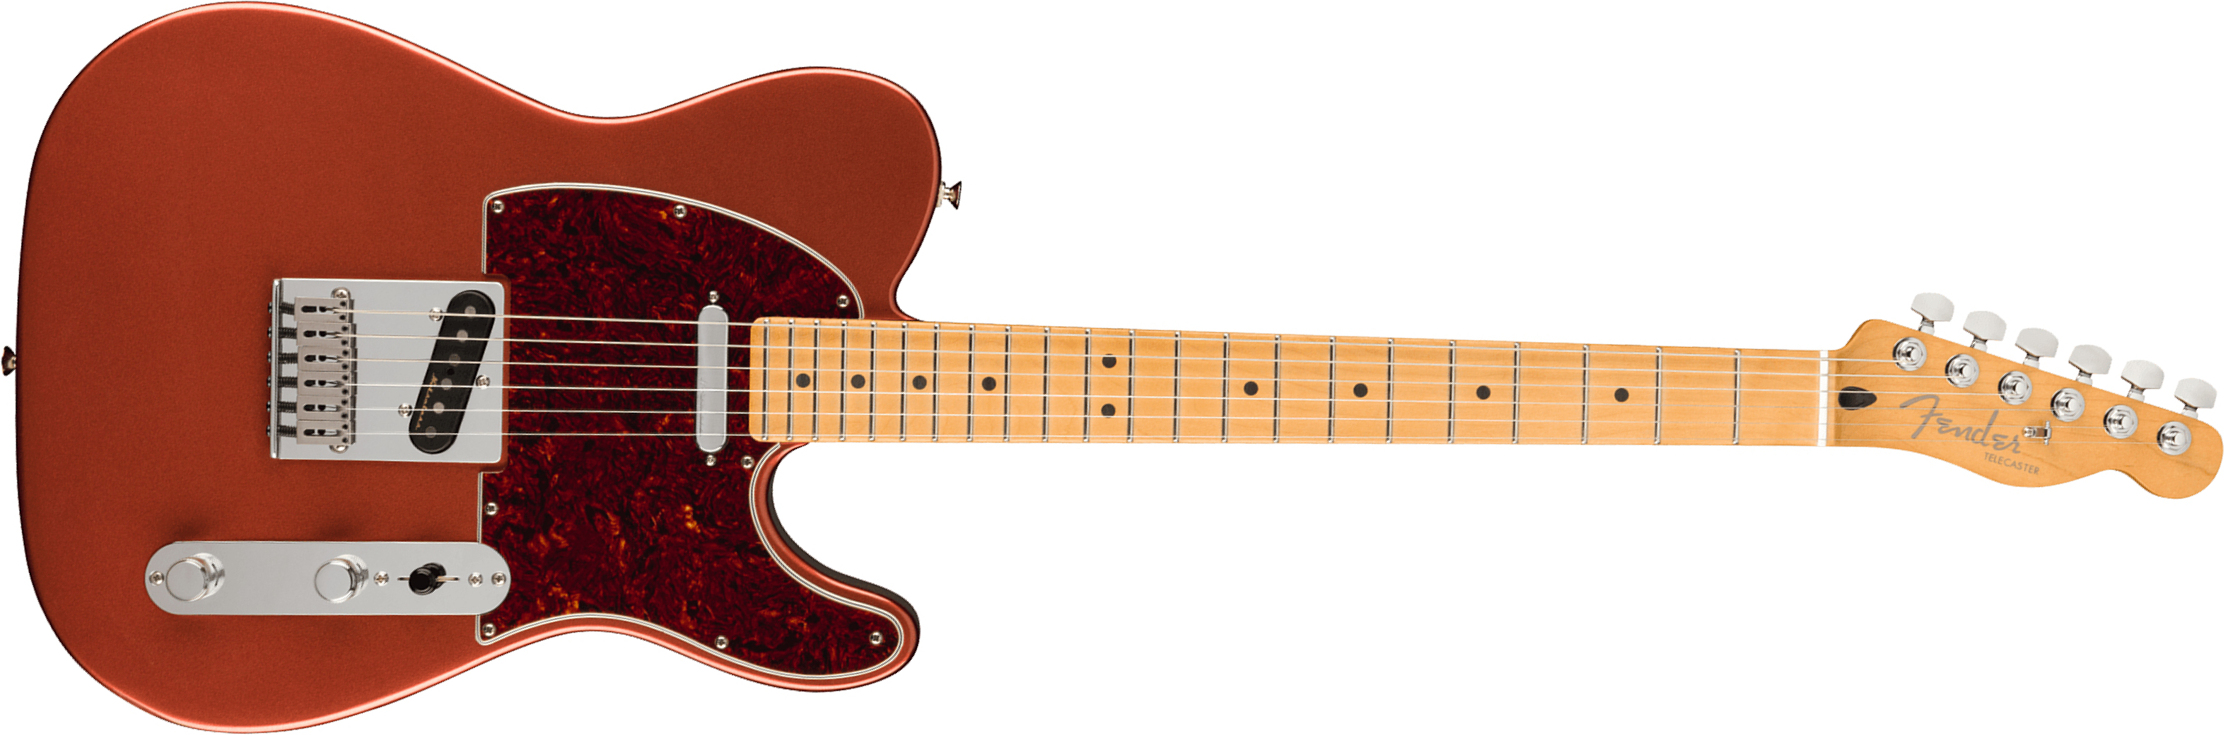 Fender Tele Player Plus Mex 2s Ht Mn - Aged Candy Apple Red - Guitare Électrique Forme Tel - Main picture